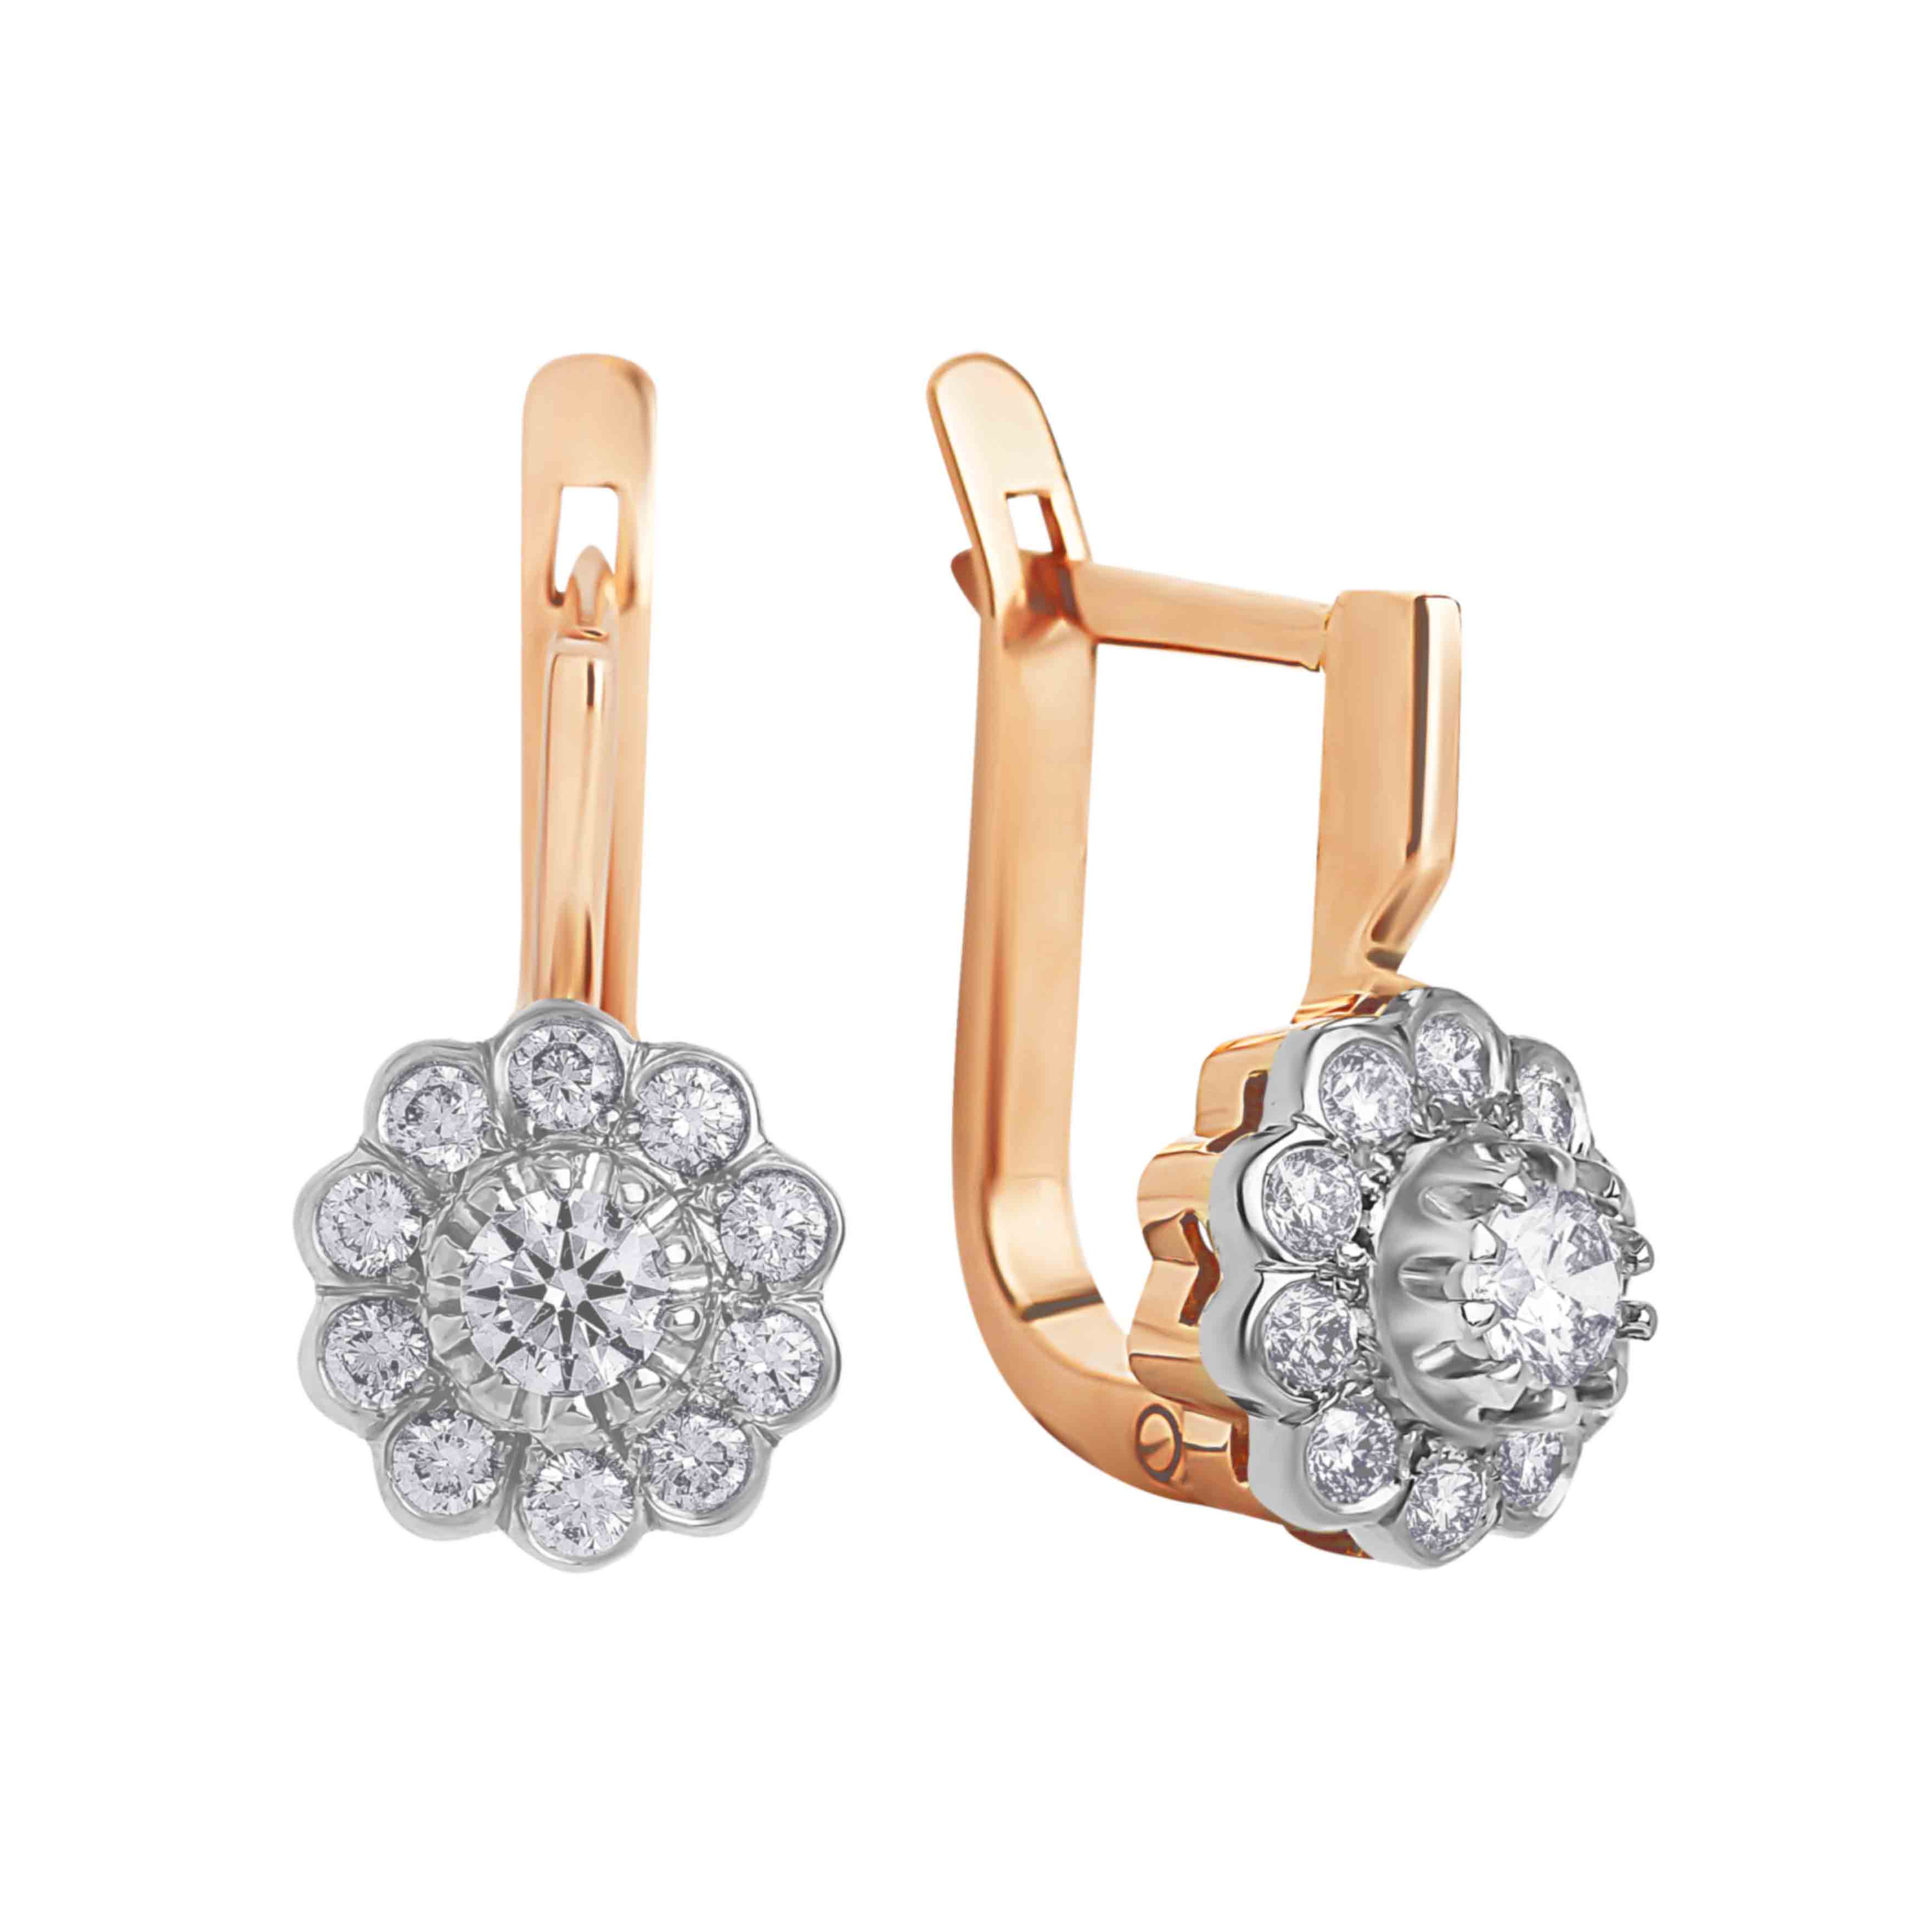 Diamond Leverback Earrings. Certified 585 (14kt) Rose Gold, Rhodium Detailing. Solitaire Diamond Leverback Earrings